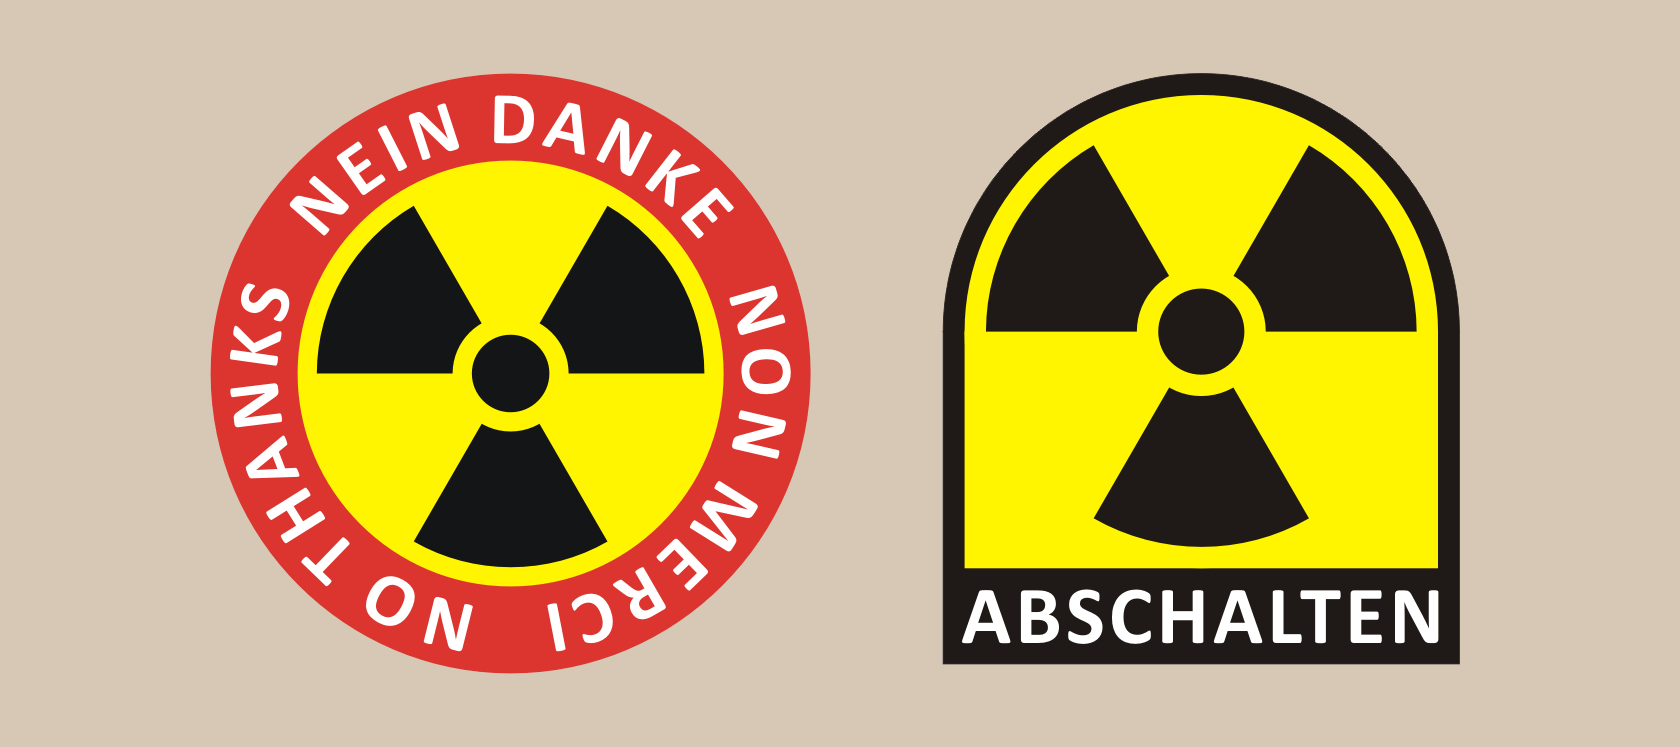 Logos - Atomkraft nein Danke - Atomkraft abschalten